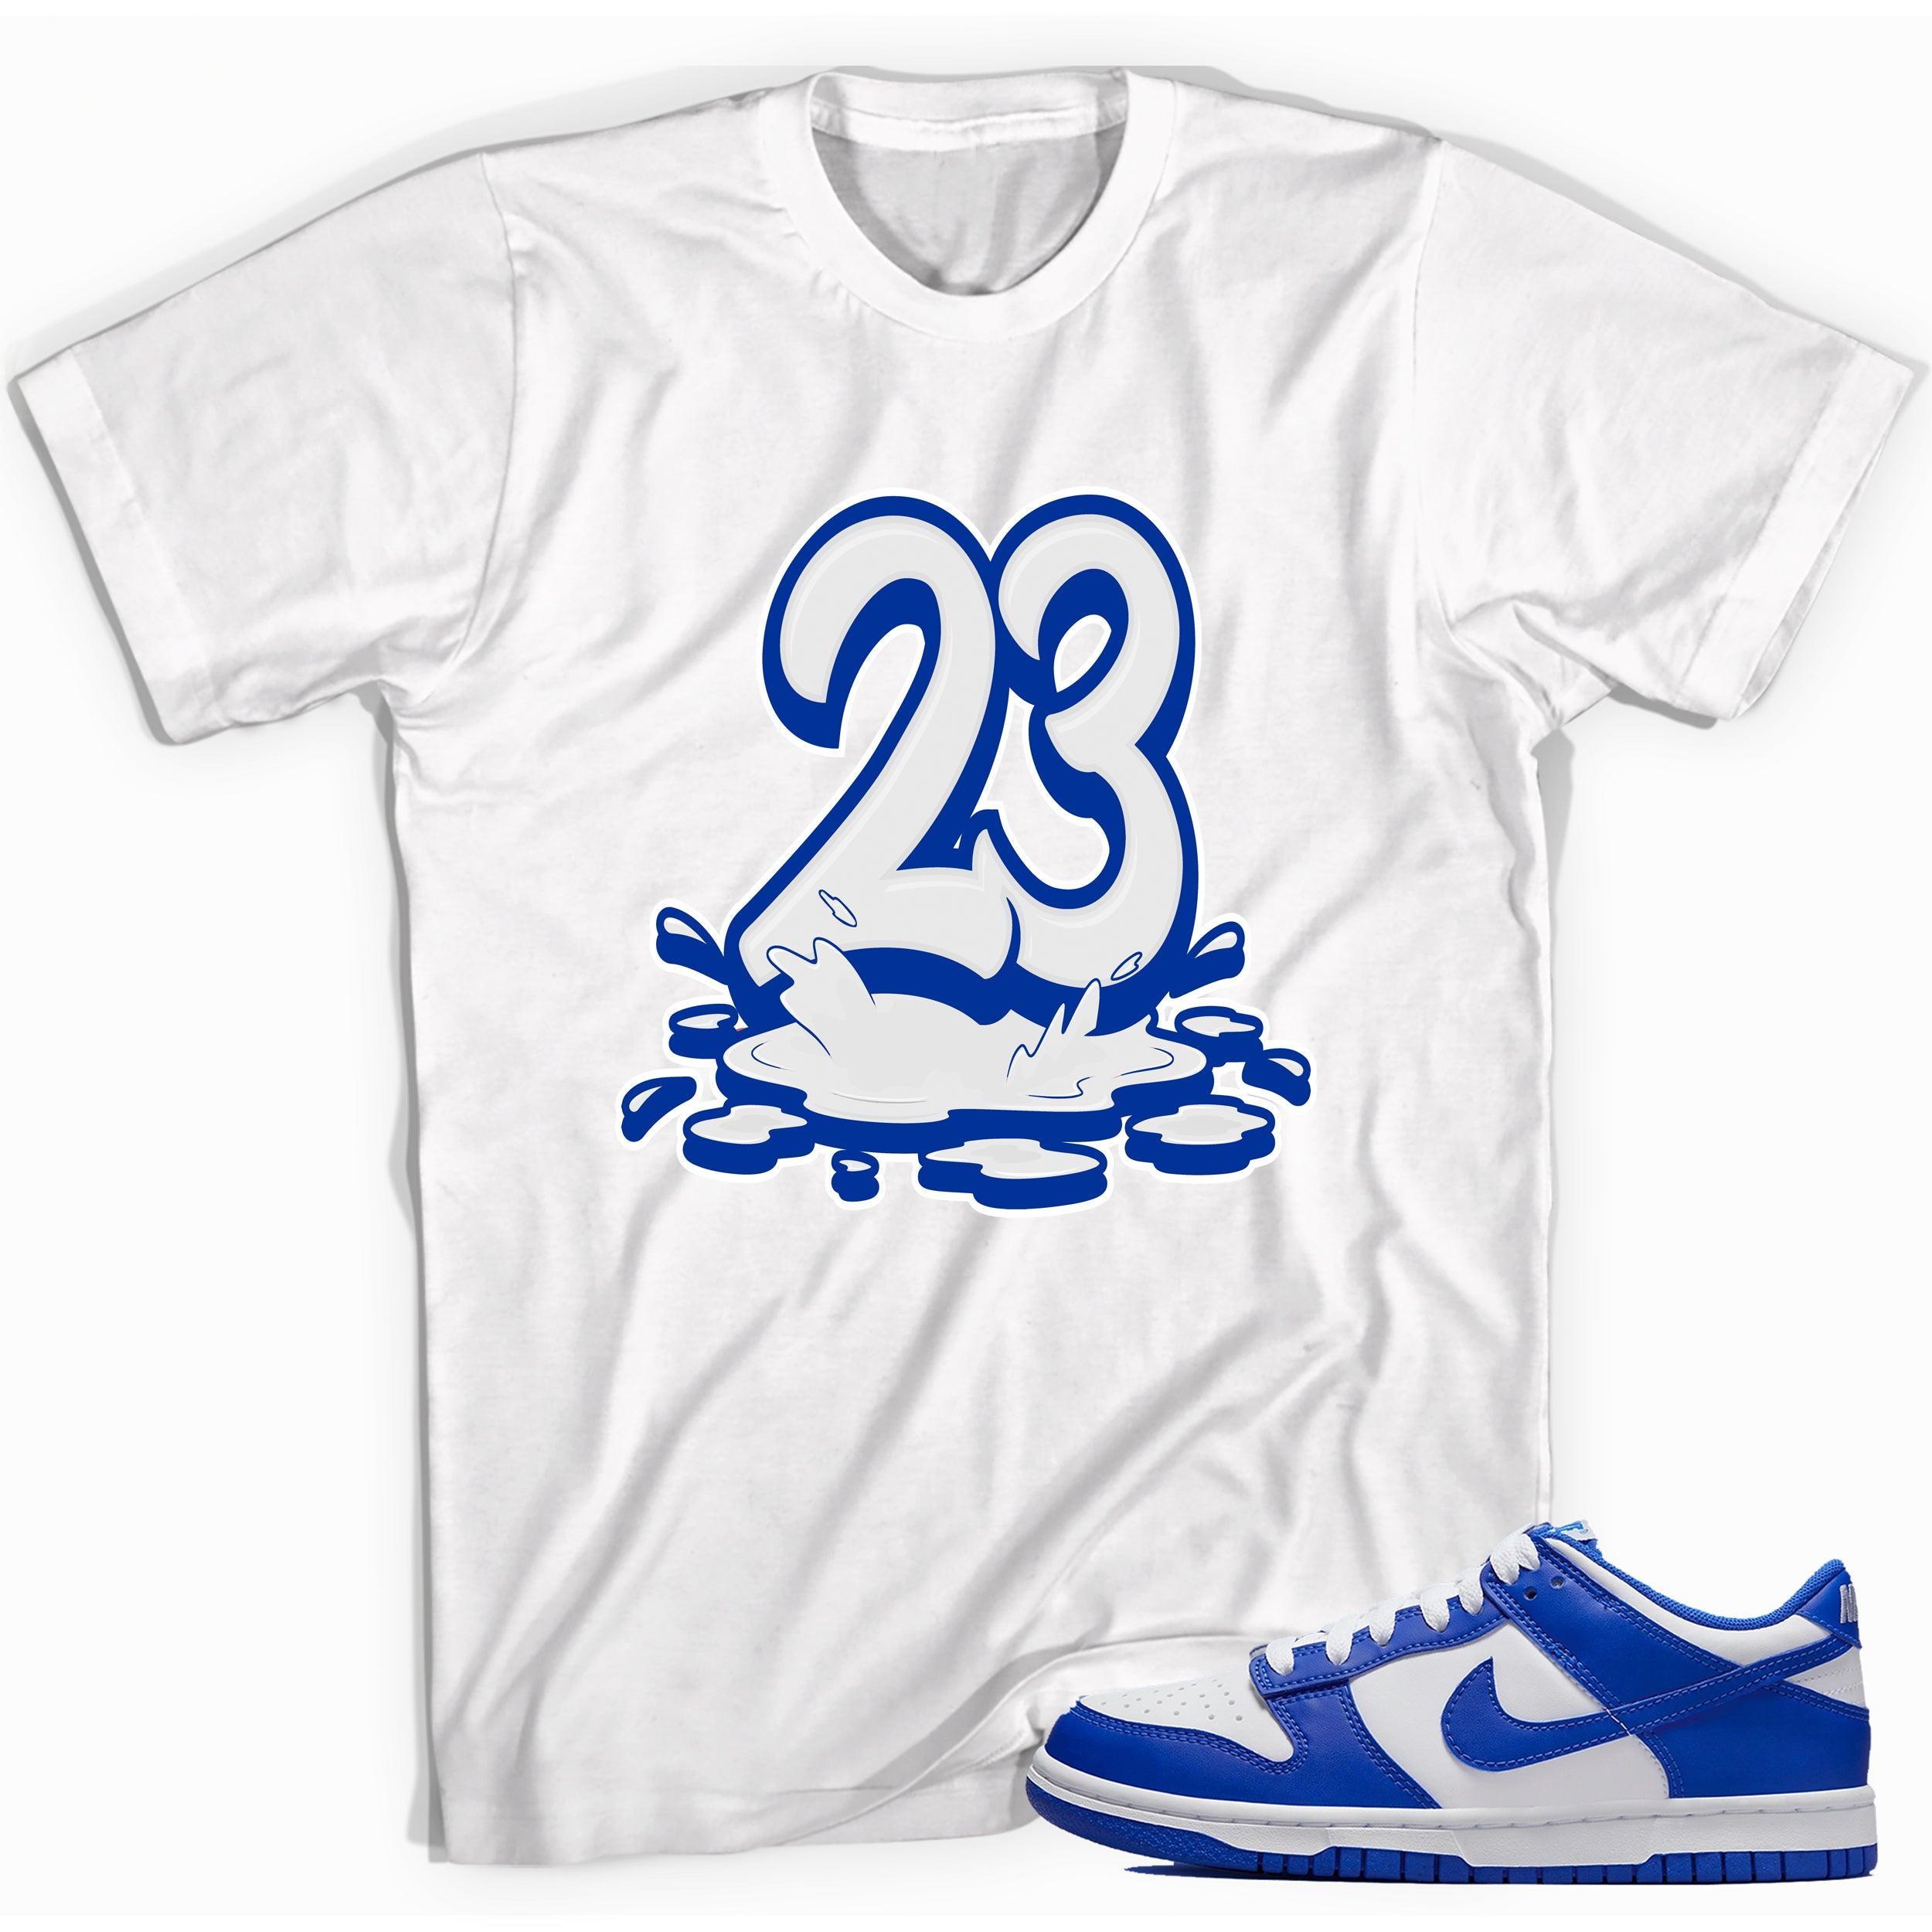 Number 23 Melting Shirt Nike Dunk Low Racer Blue photo